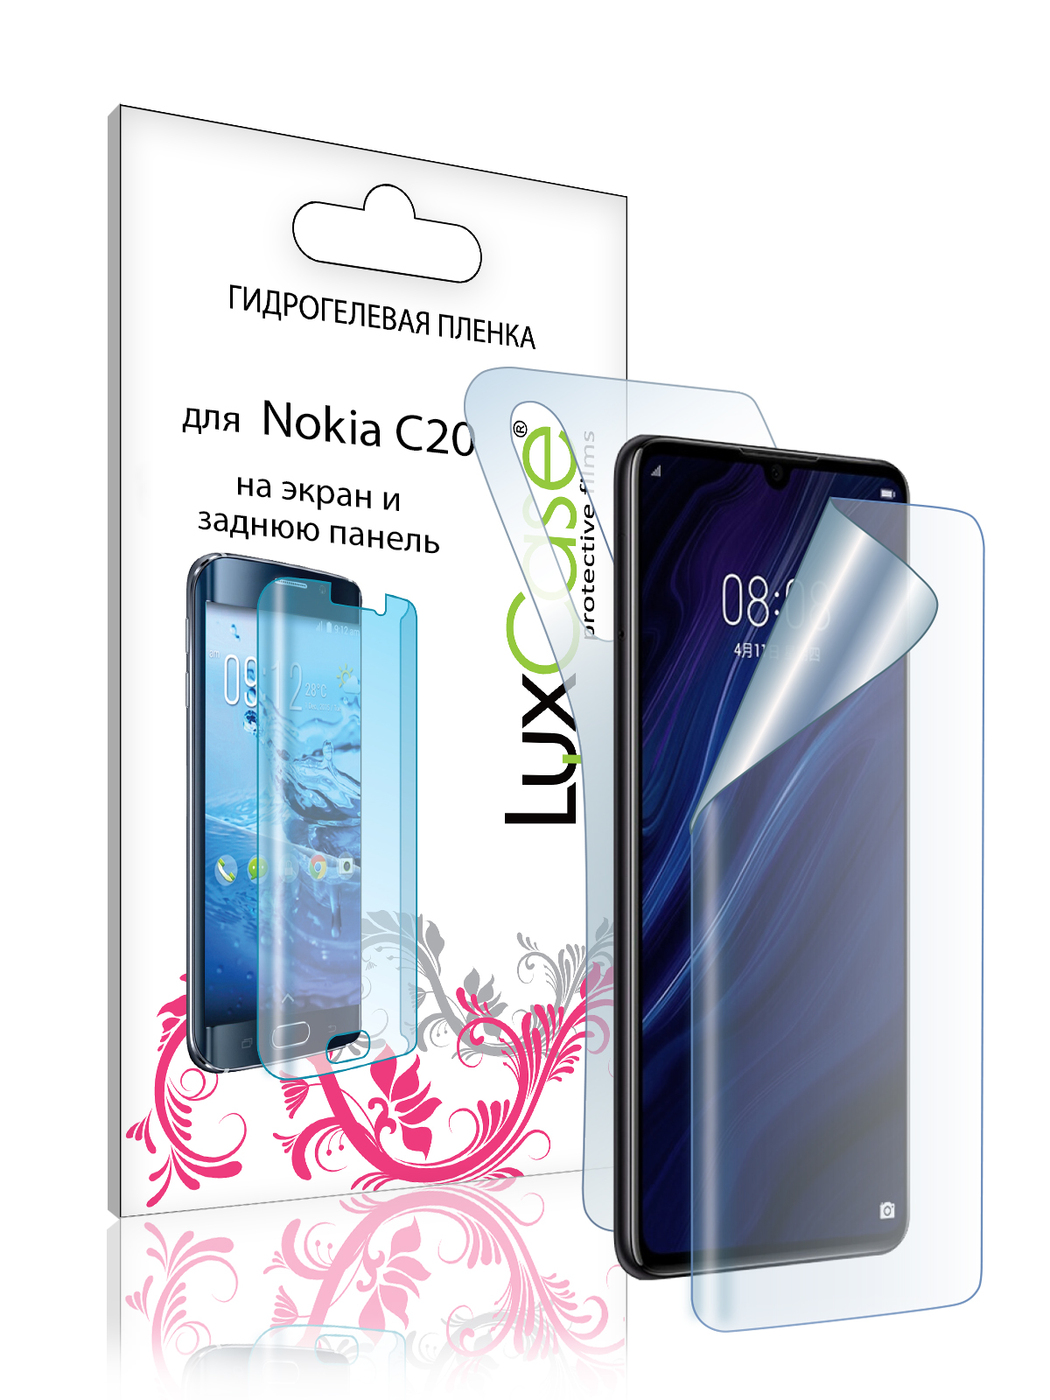 Пленка гидрогелевая LuxCase для Nokia C20 Front and Back Transparent 86388 гидрогелевая пленка luxcase для tcl 305 0 14mm transparent front and back 90593